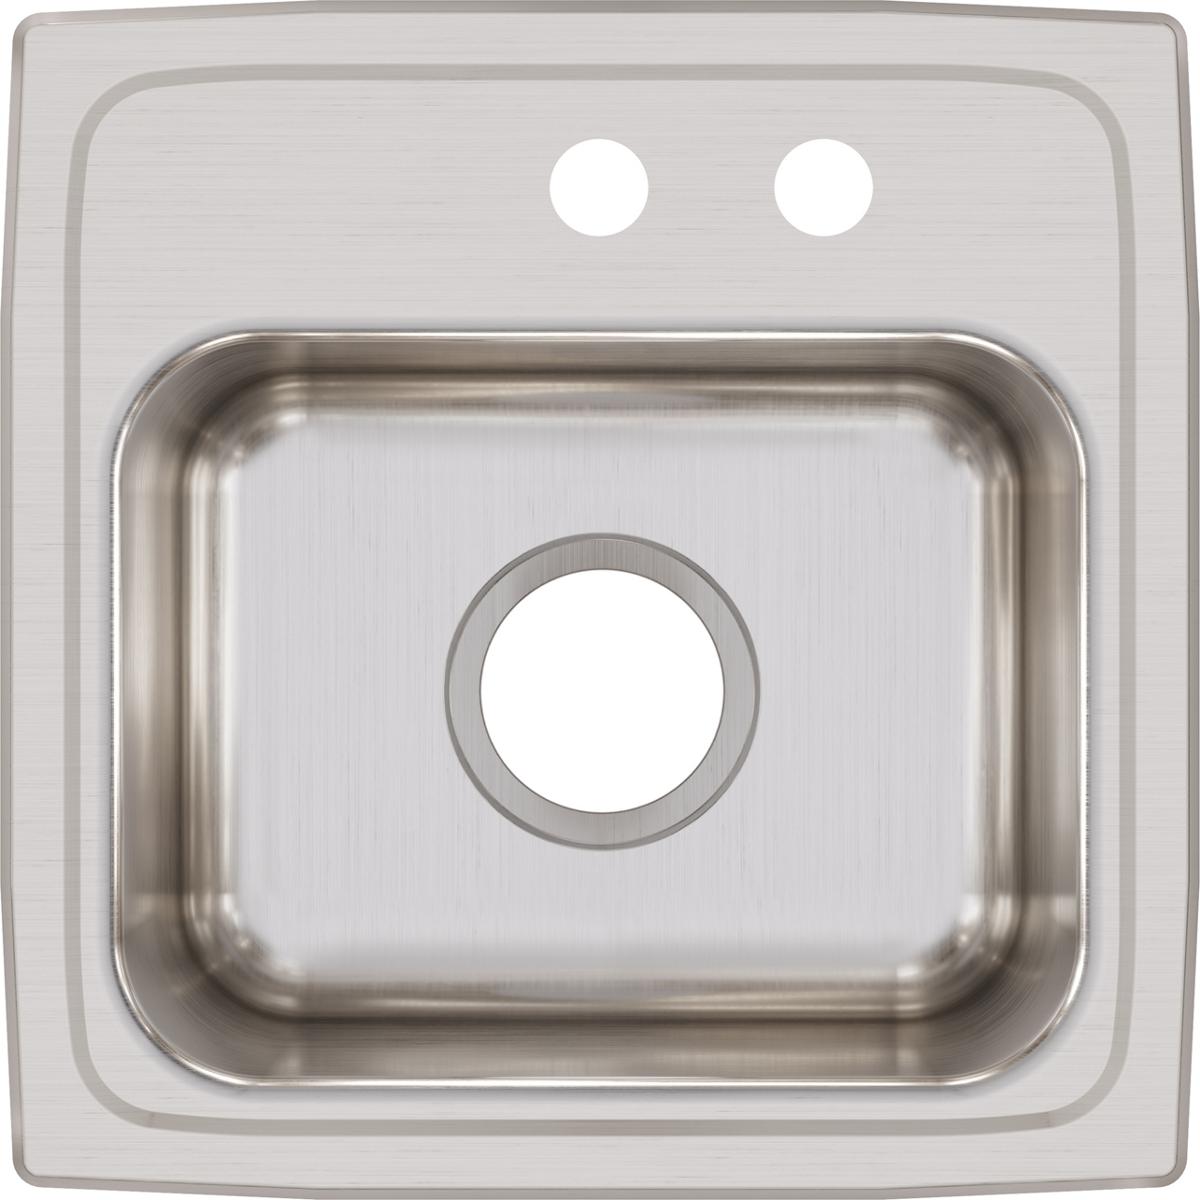 Elkay Lustertone Classic Stainless Steel 15" x 15" x 7-1/8" Drop-in Single Bowl Bar Sink